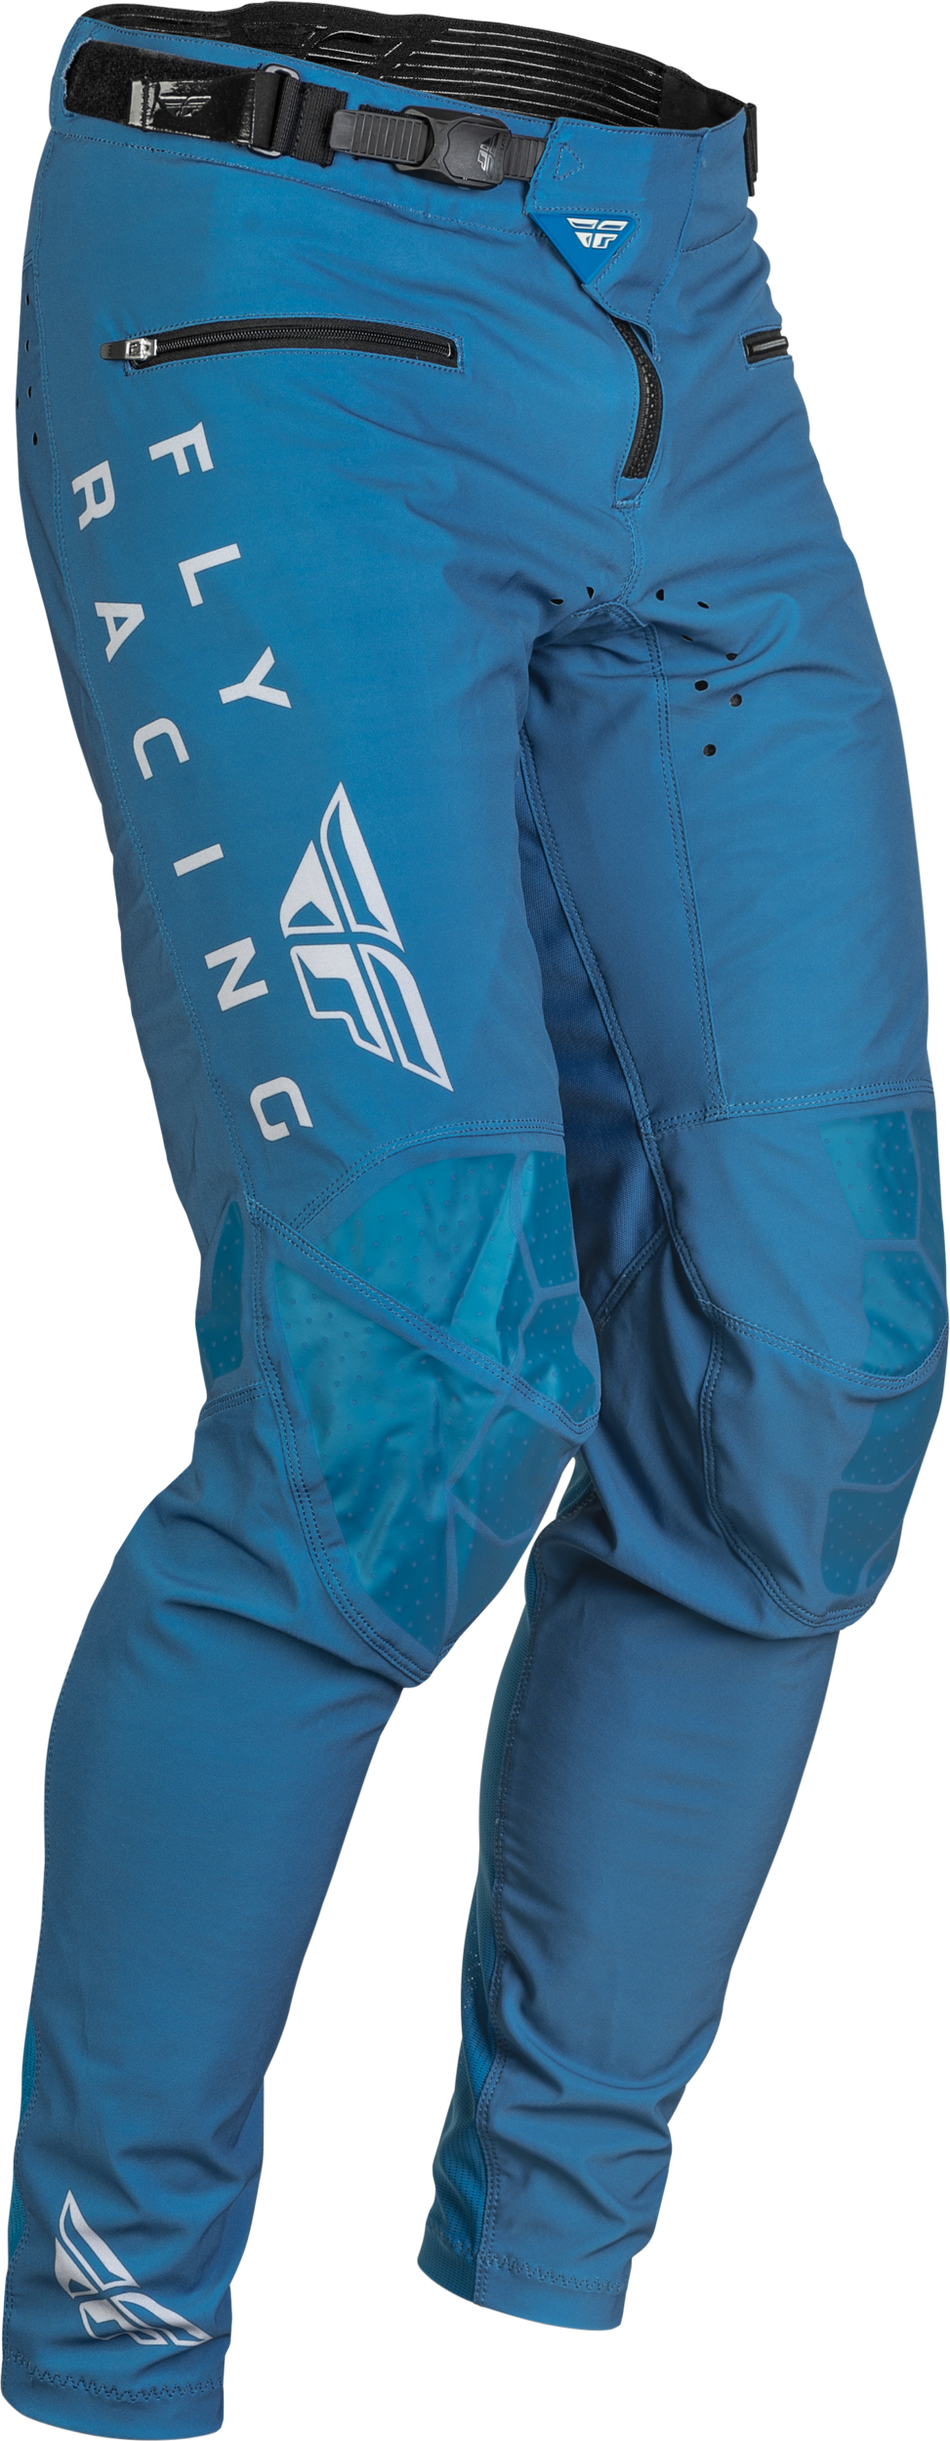 FLY RACING Youth Radium Bicycle Pants Slate Blue/Grey Sz 24 376-04424